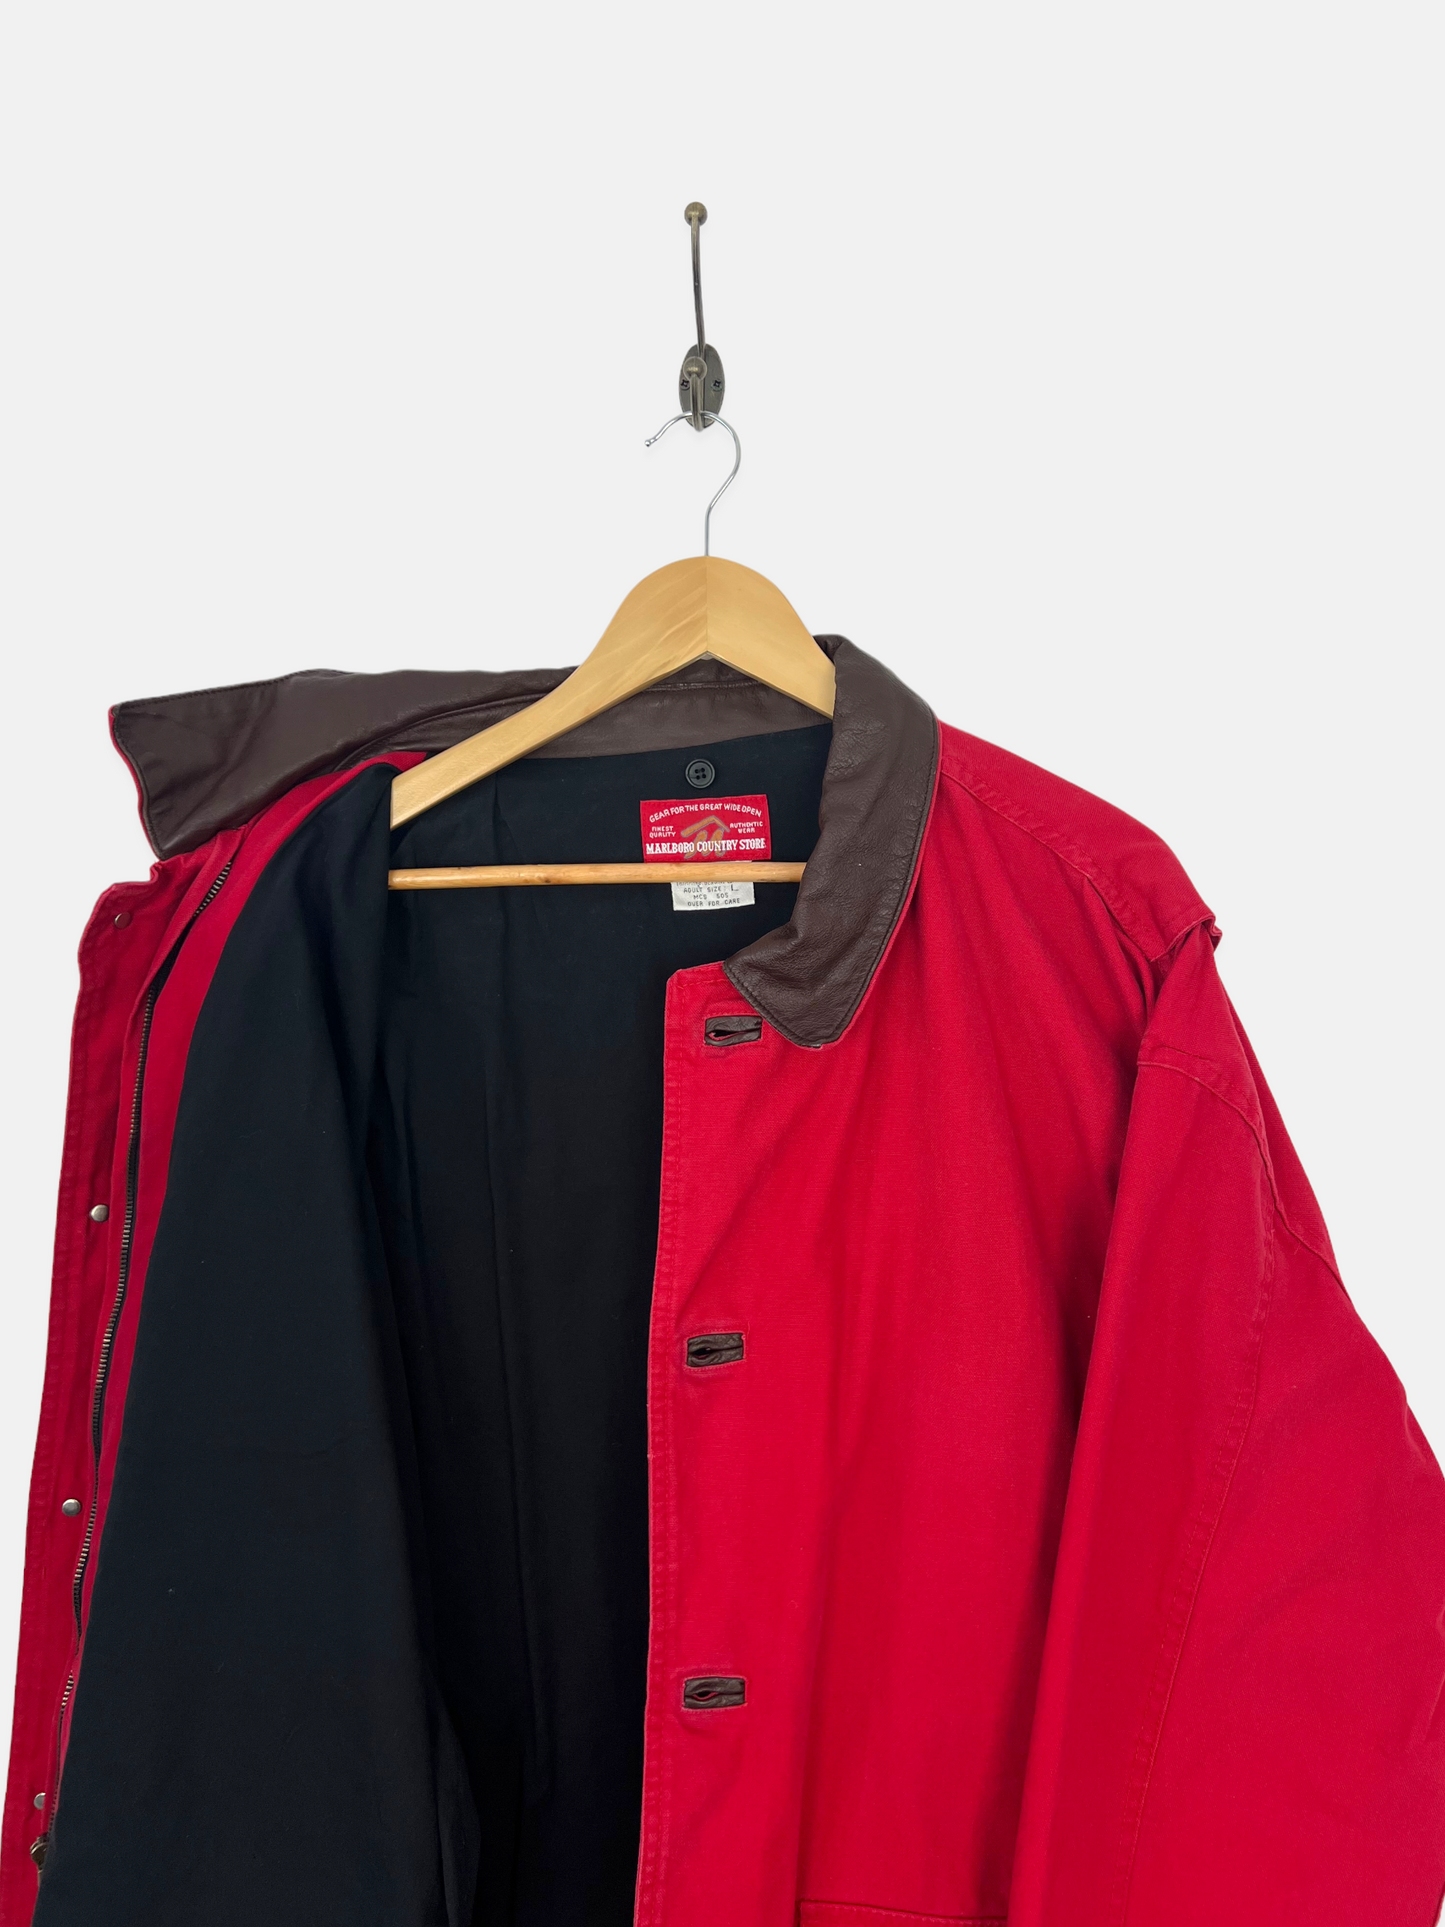 90's Marlboro Country Store Vintage Coat Jacket Size XL